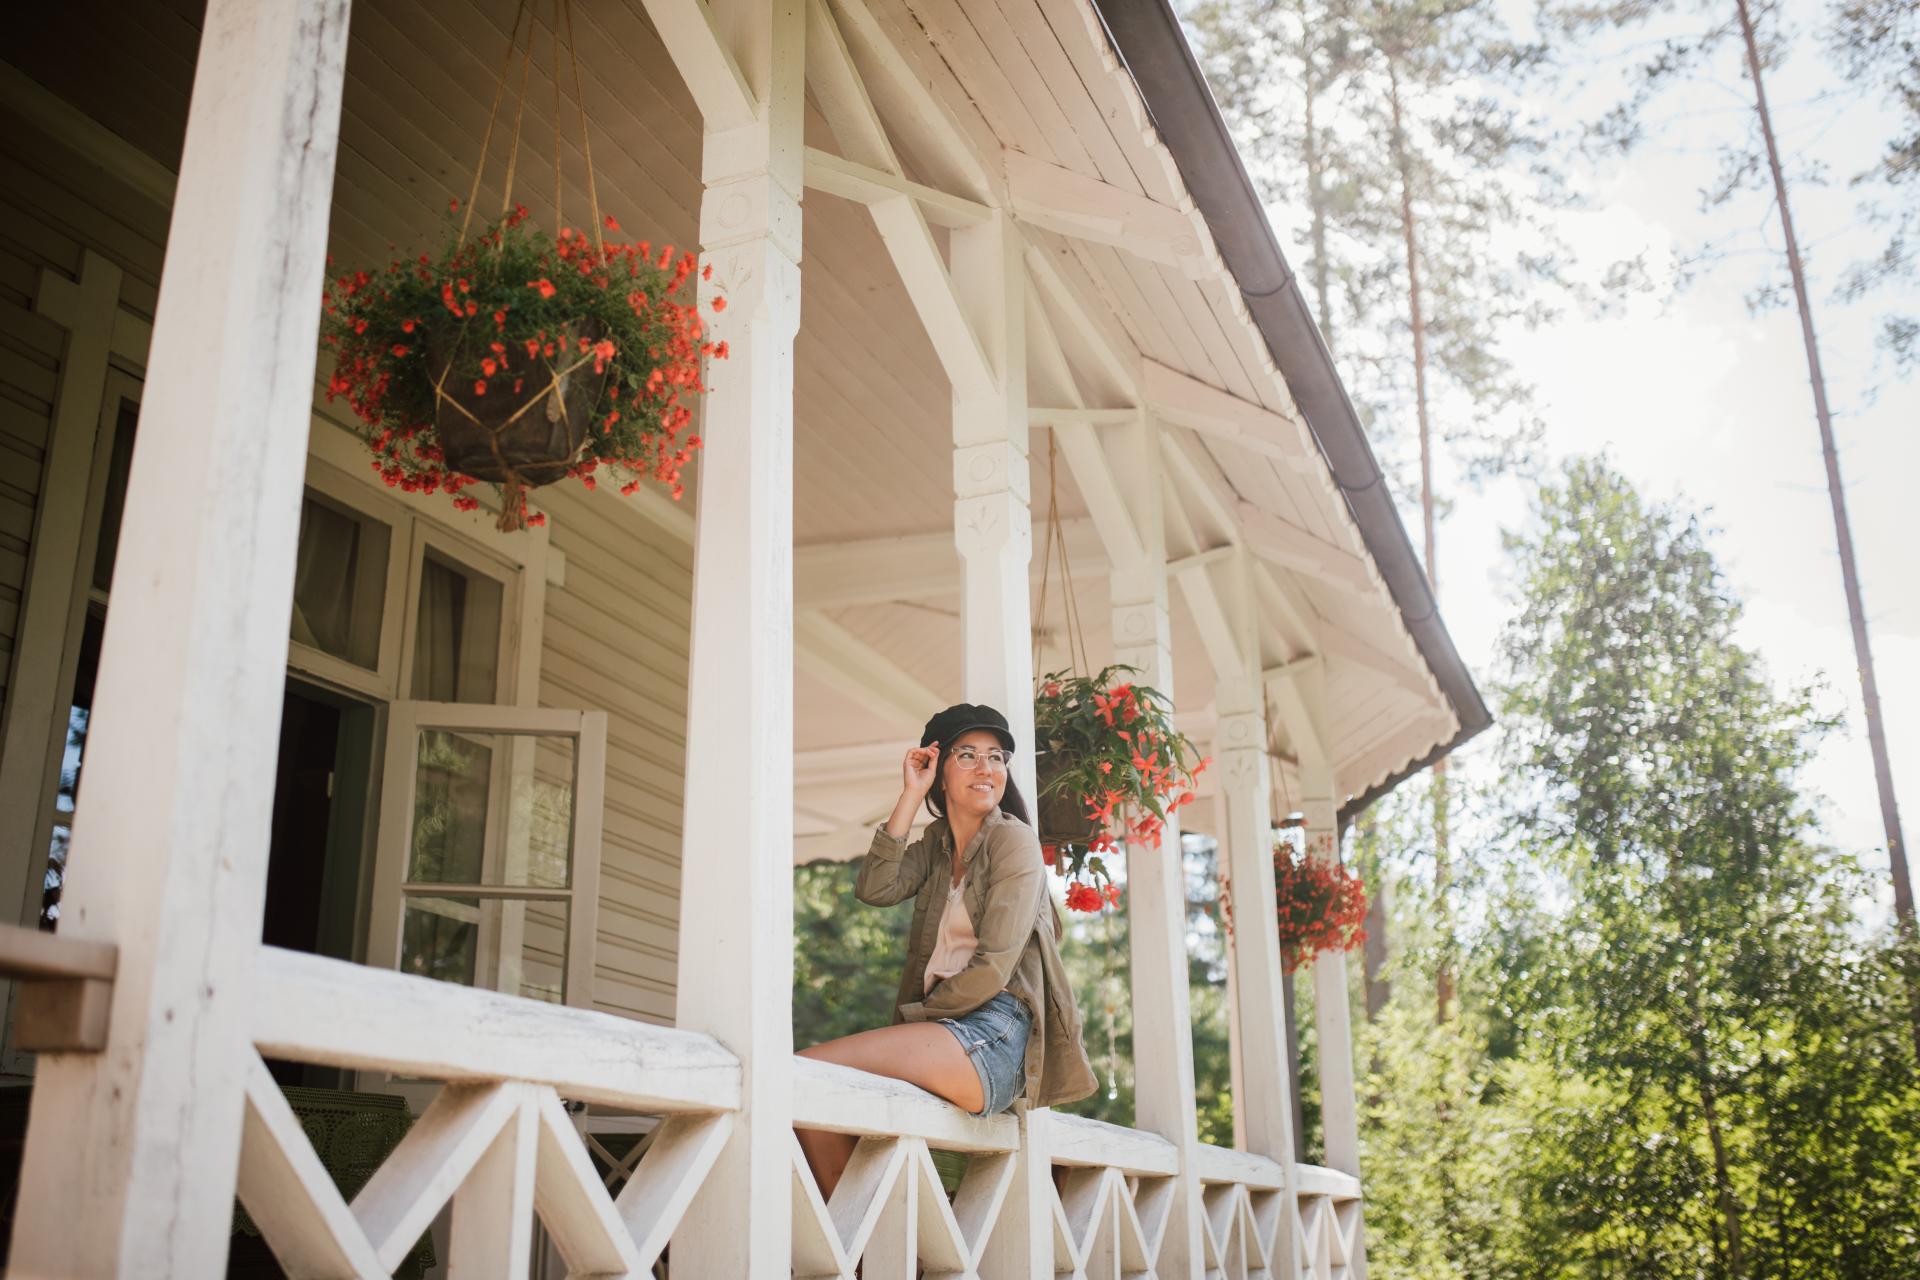 A woman sitting on porch or a villa. 